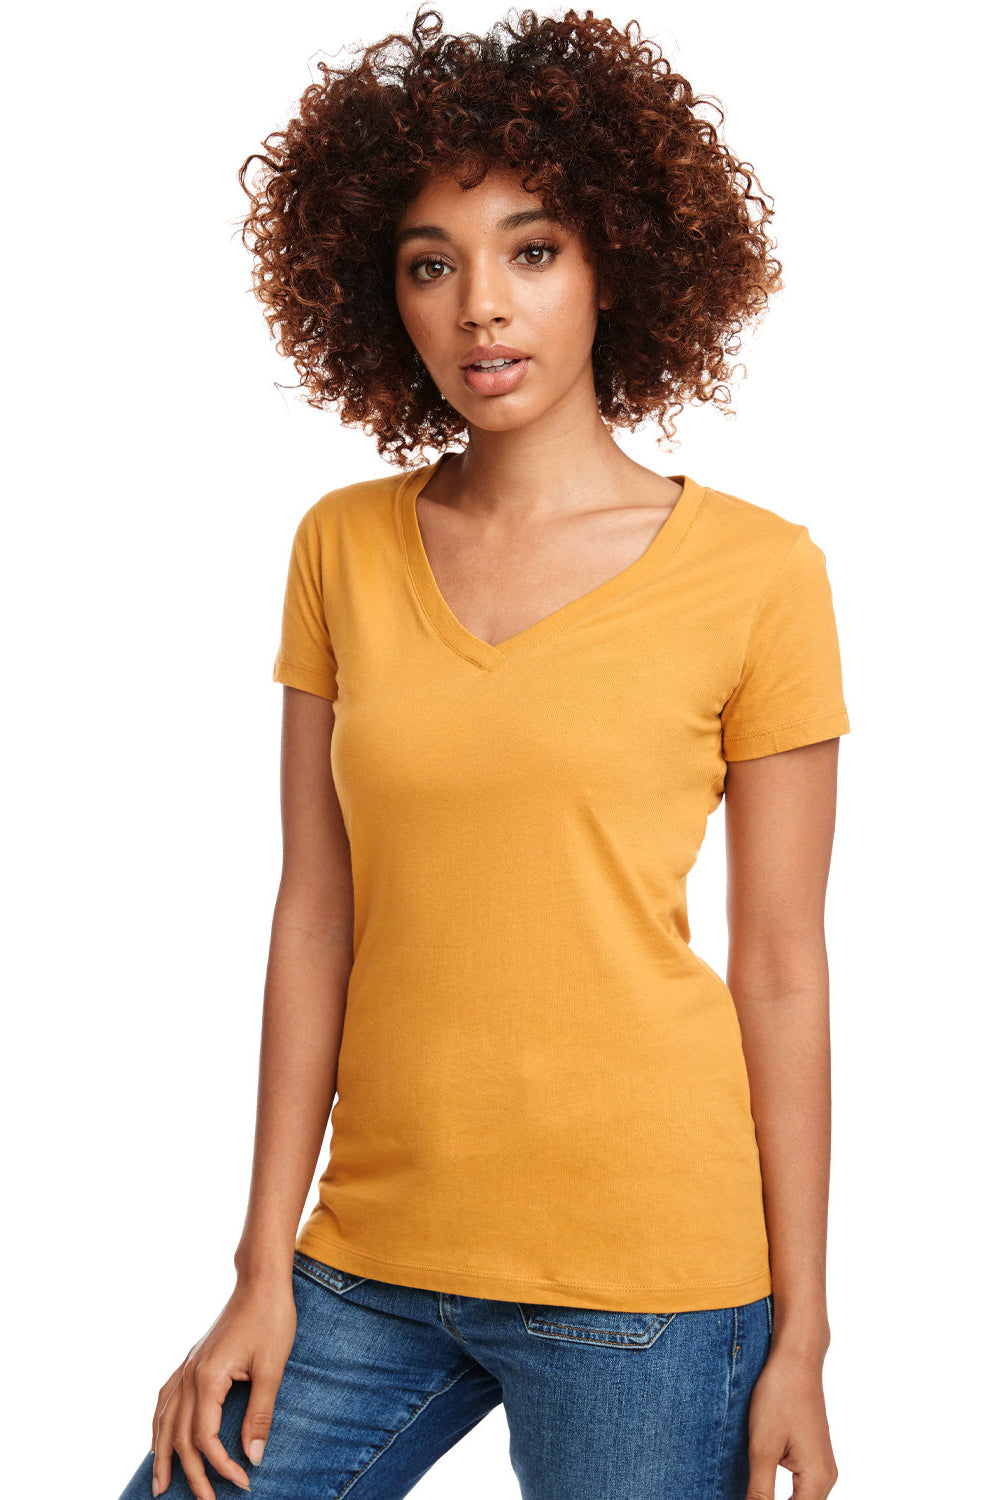 Next Level N1540/1540 Womens Ideal Jersey Short Sleeve V-Neck T-Shirt Antique Gold Front